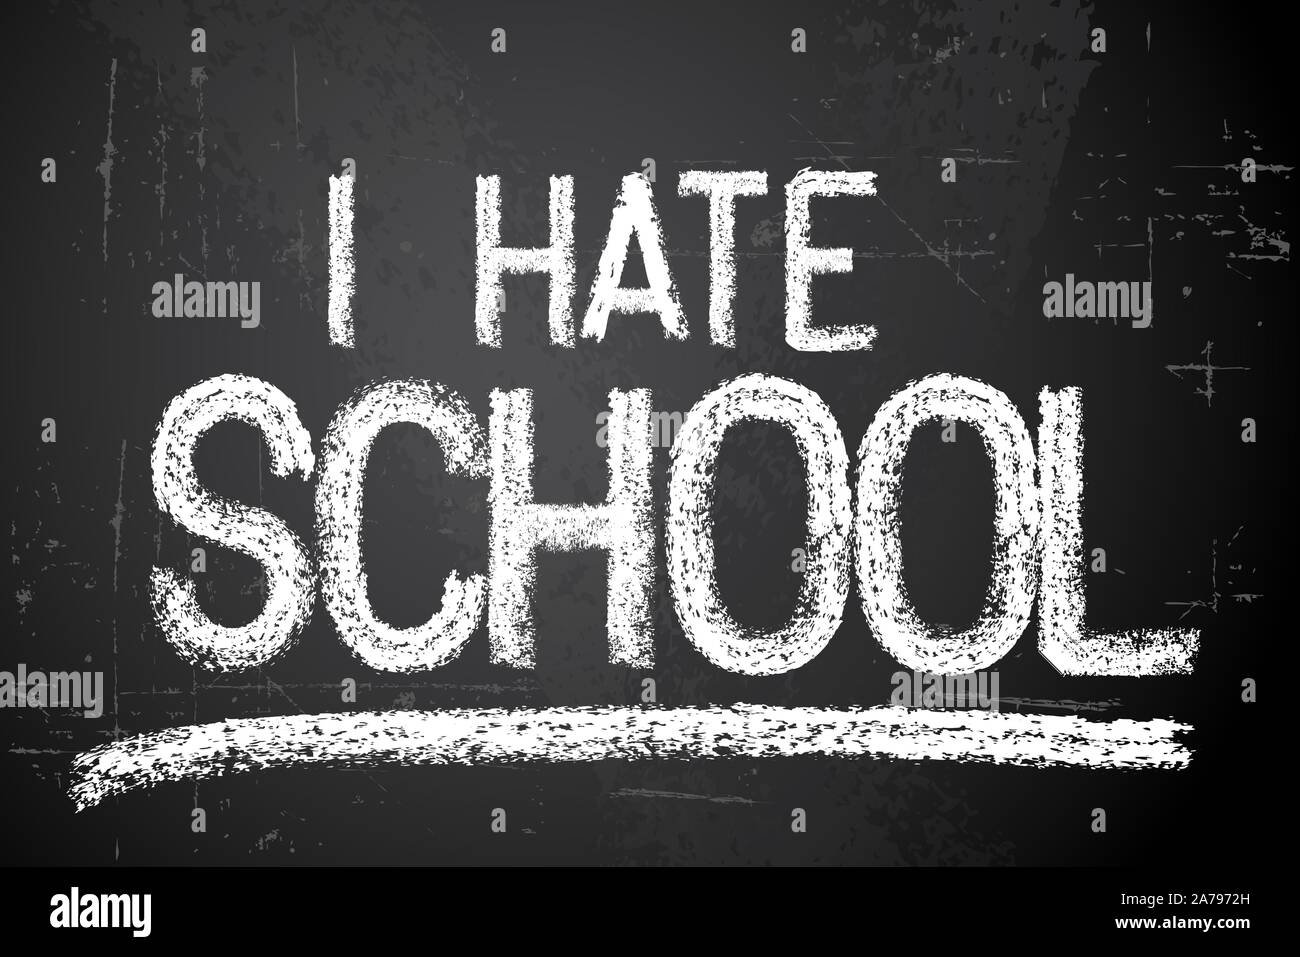 Back to school vector white illustration on chalkboard saying I hate school Stock Vector